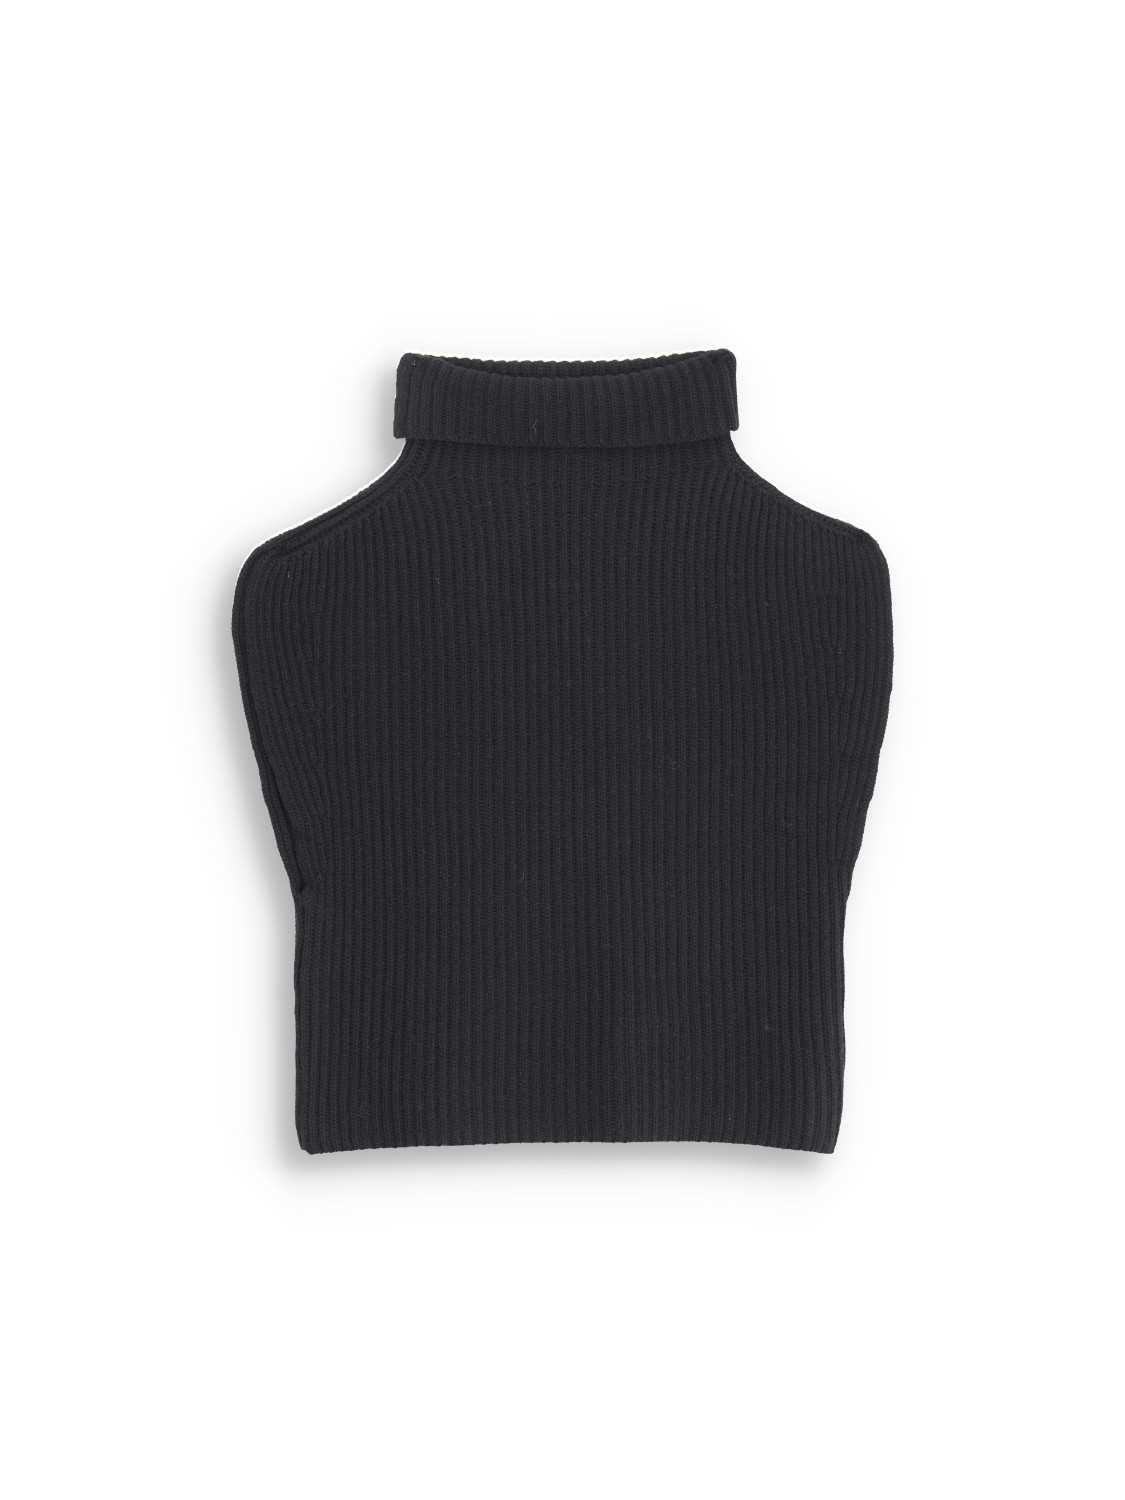 Kira - Sleeveless sweater made of wool